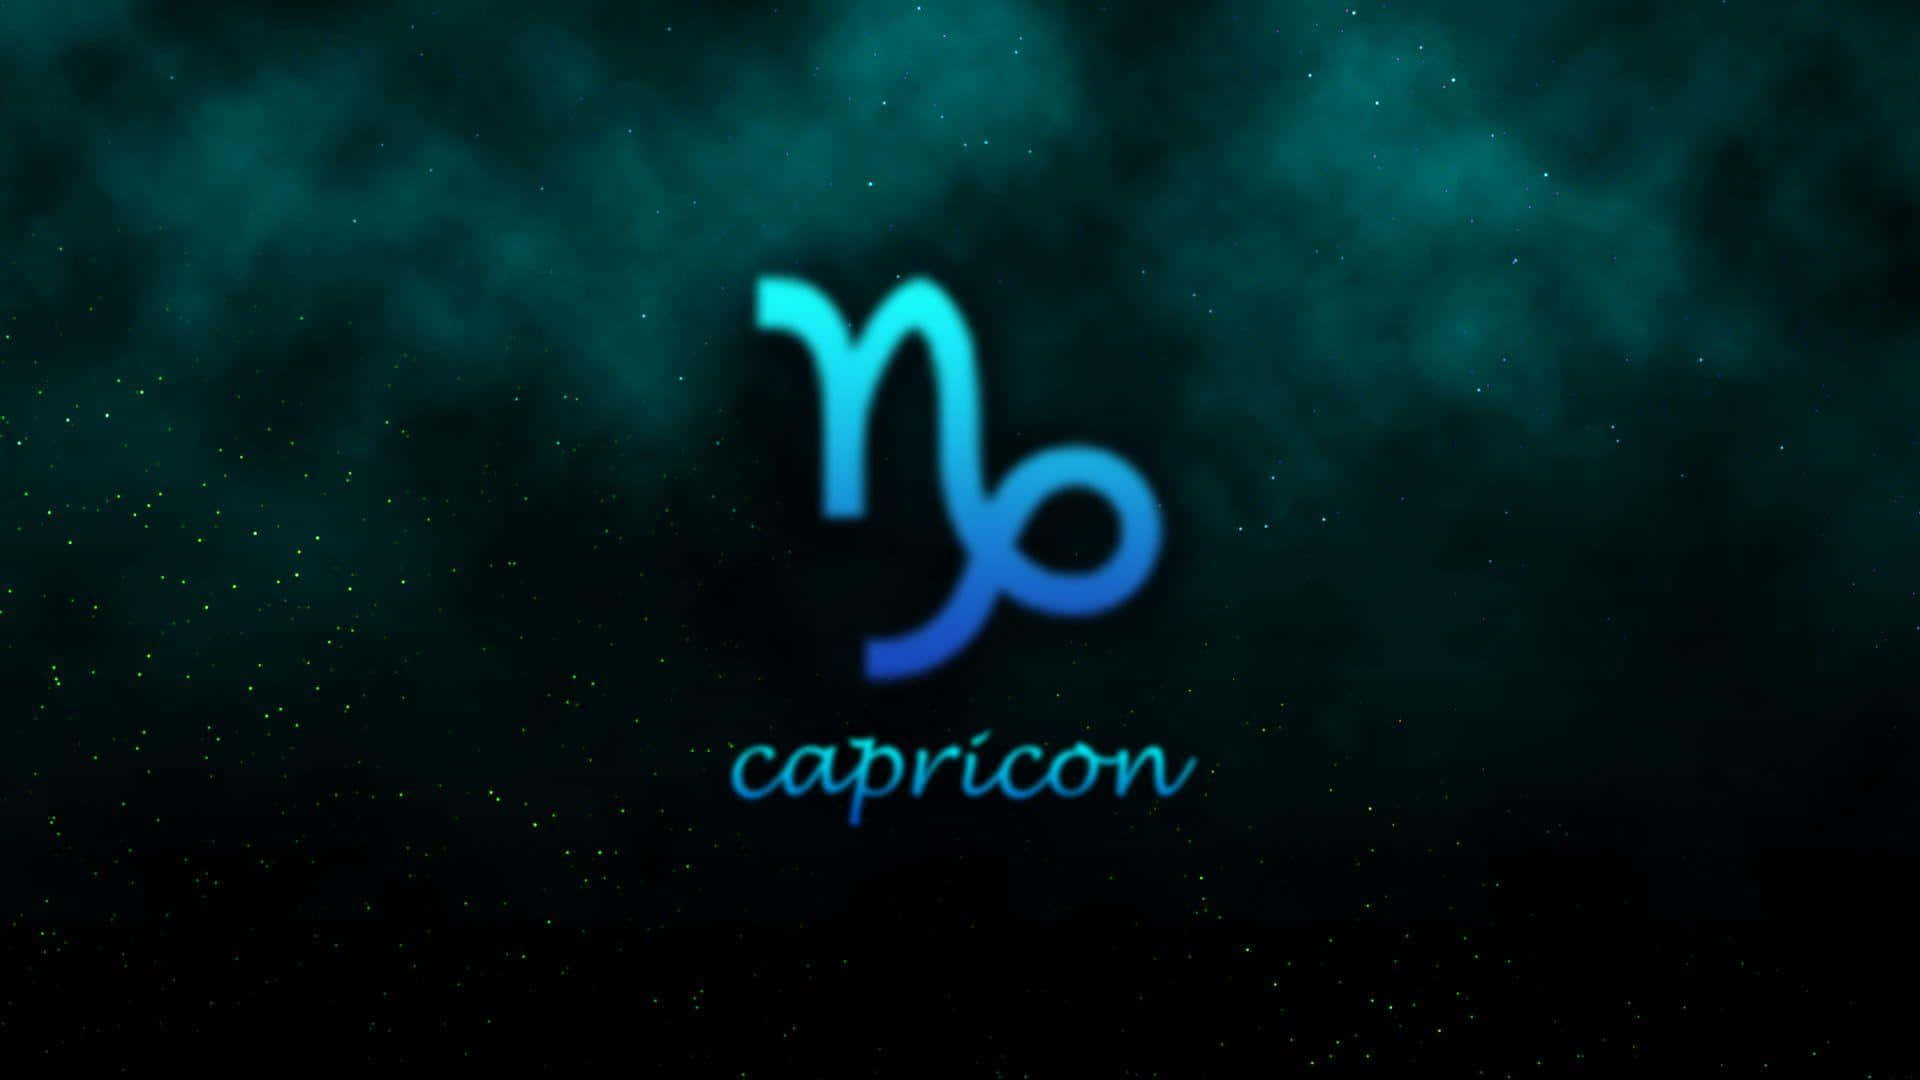 Majestic Capricorn Symbol on a Starry Night Sky